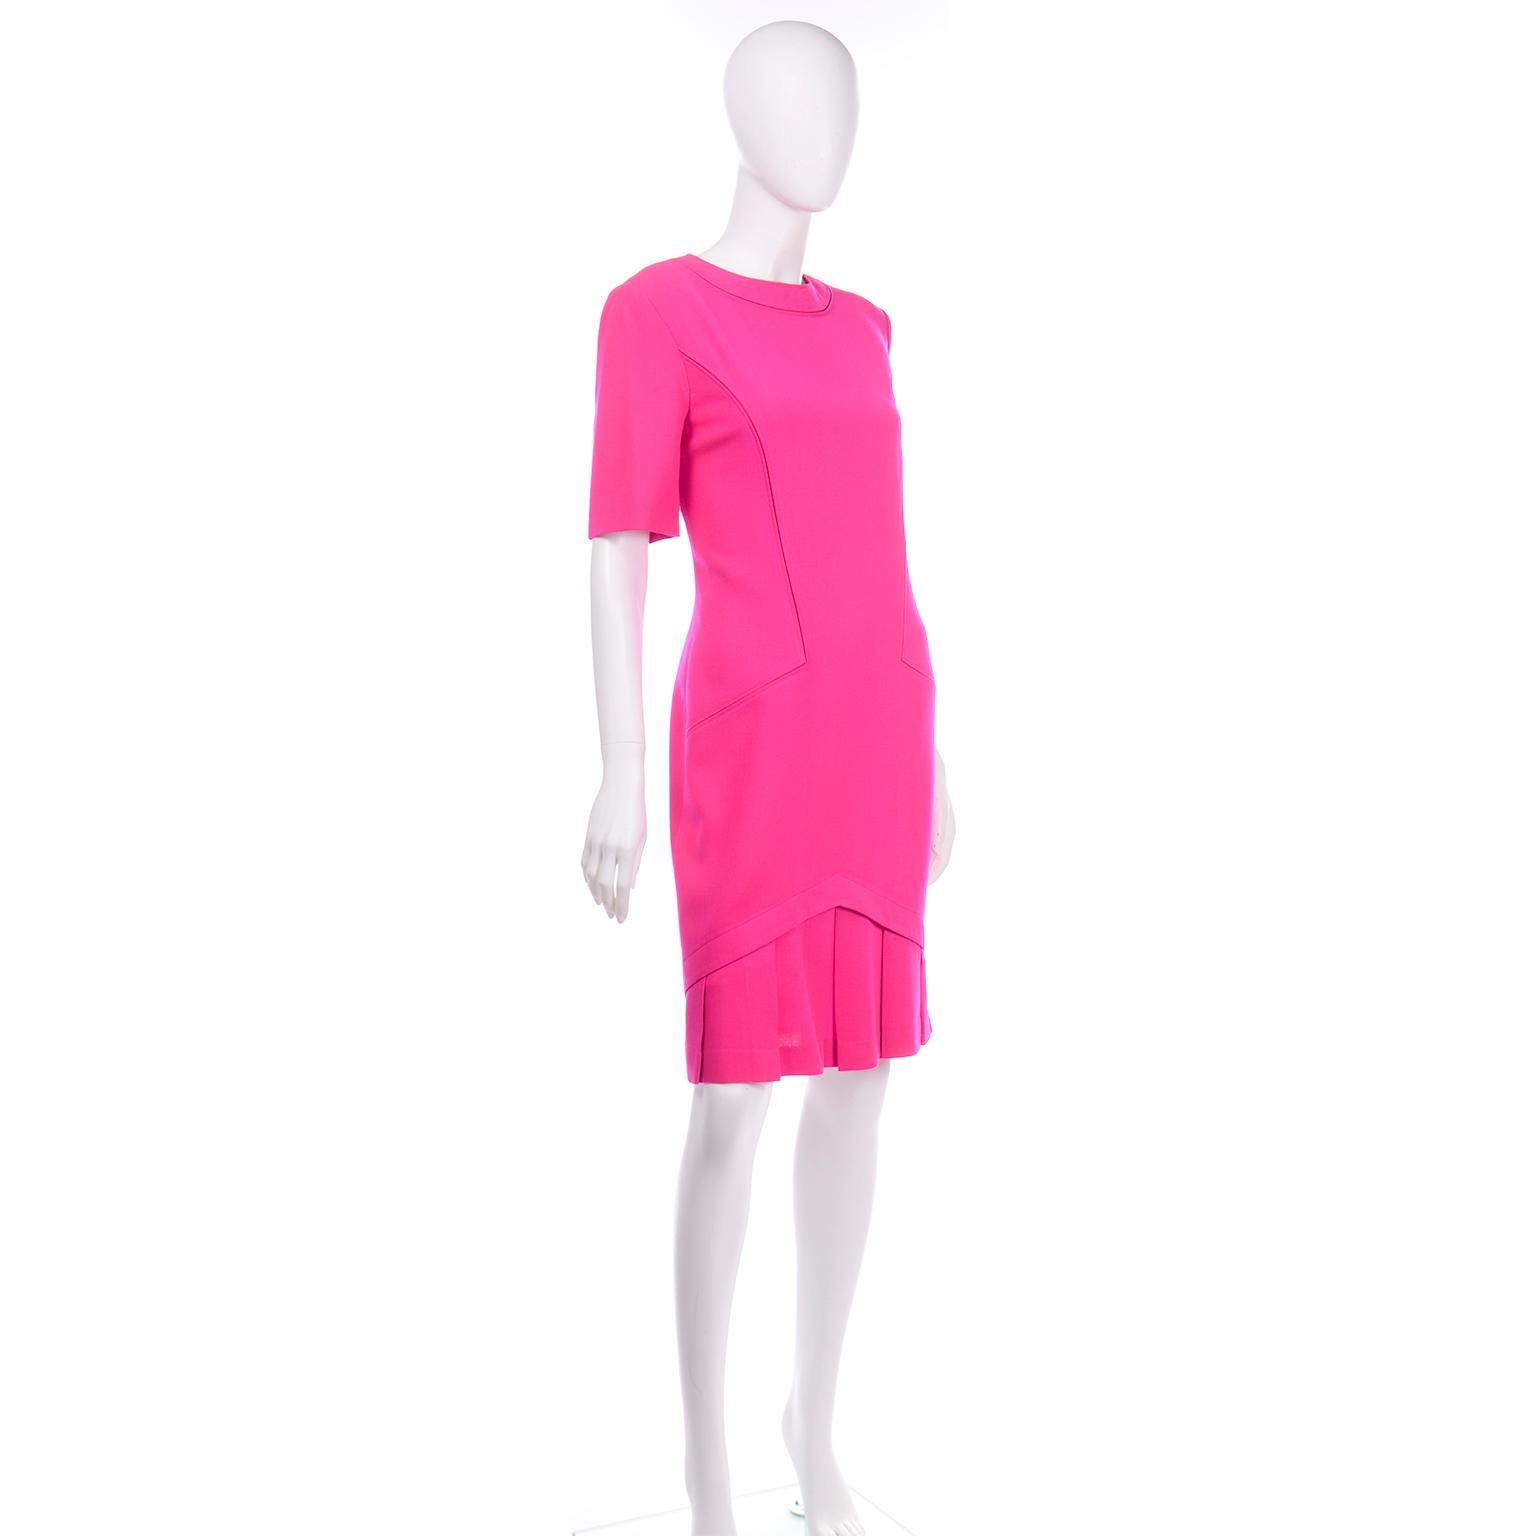 bright pink summer dress